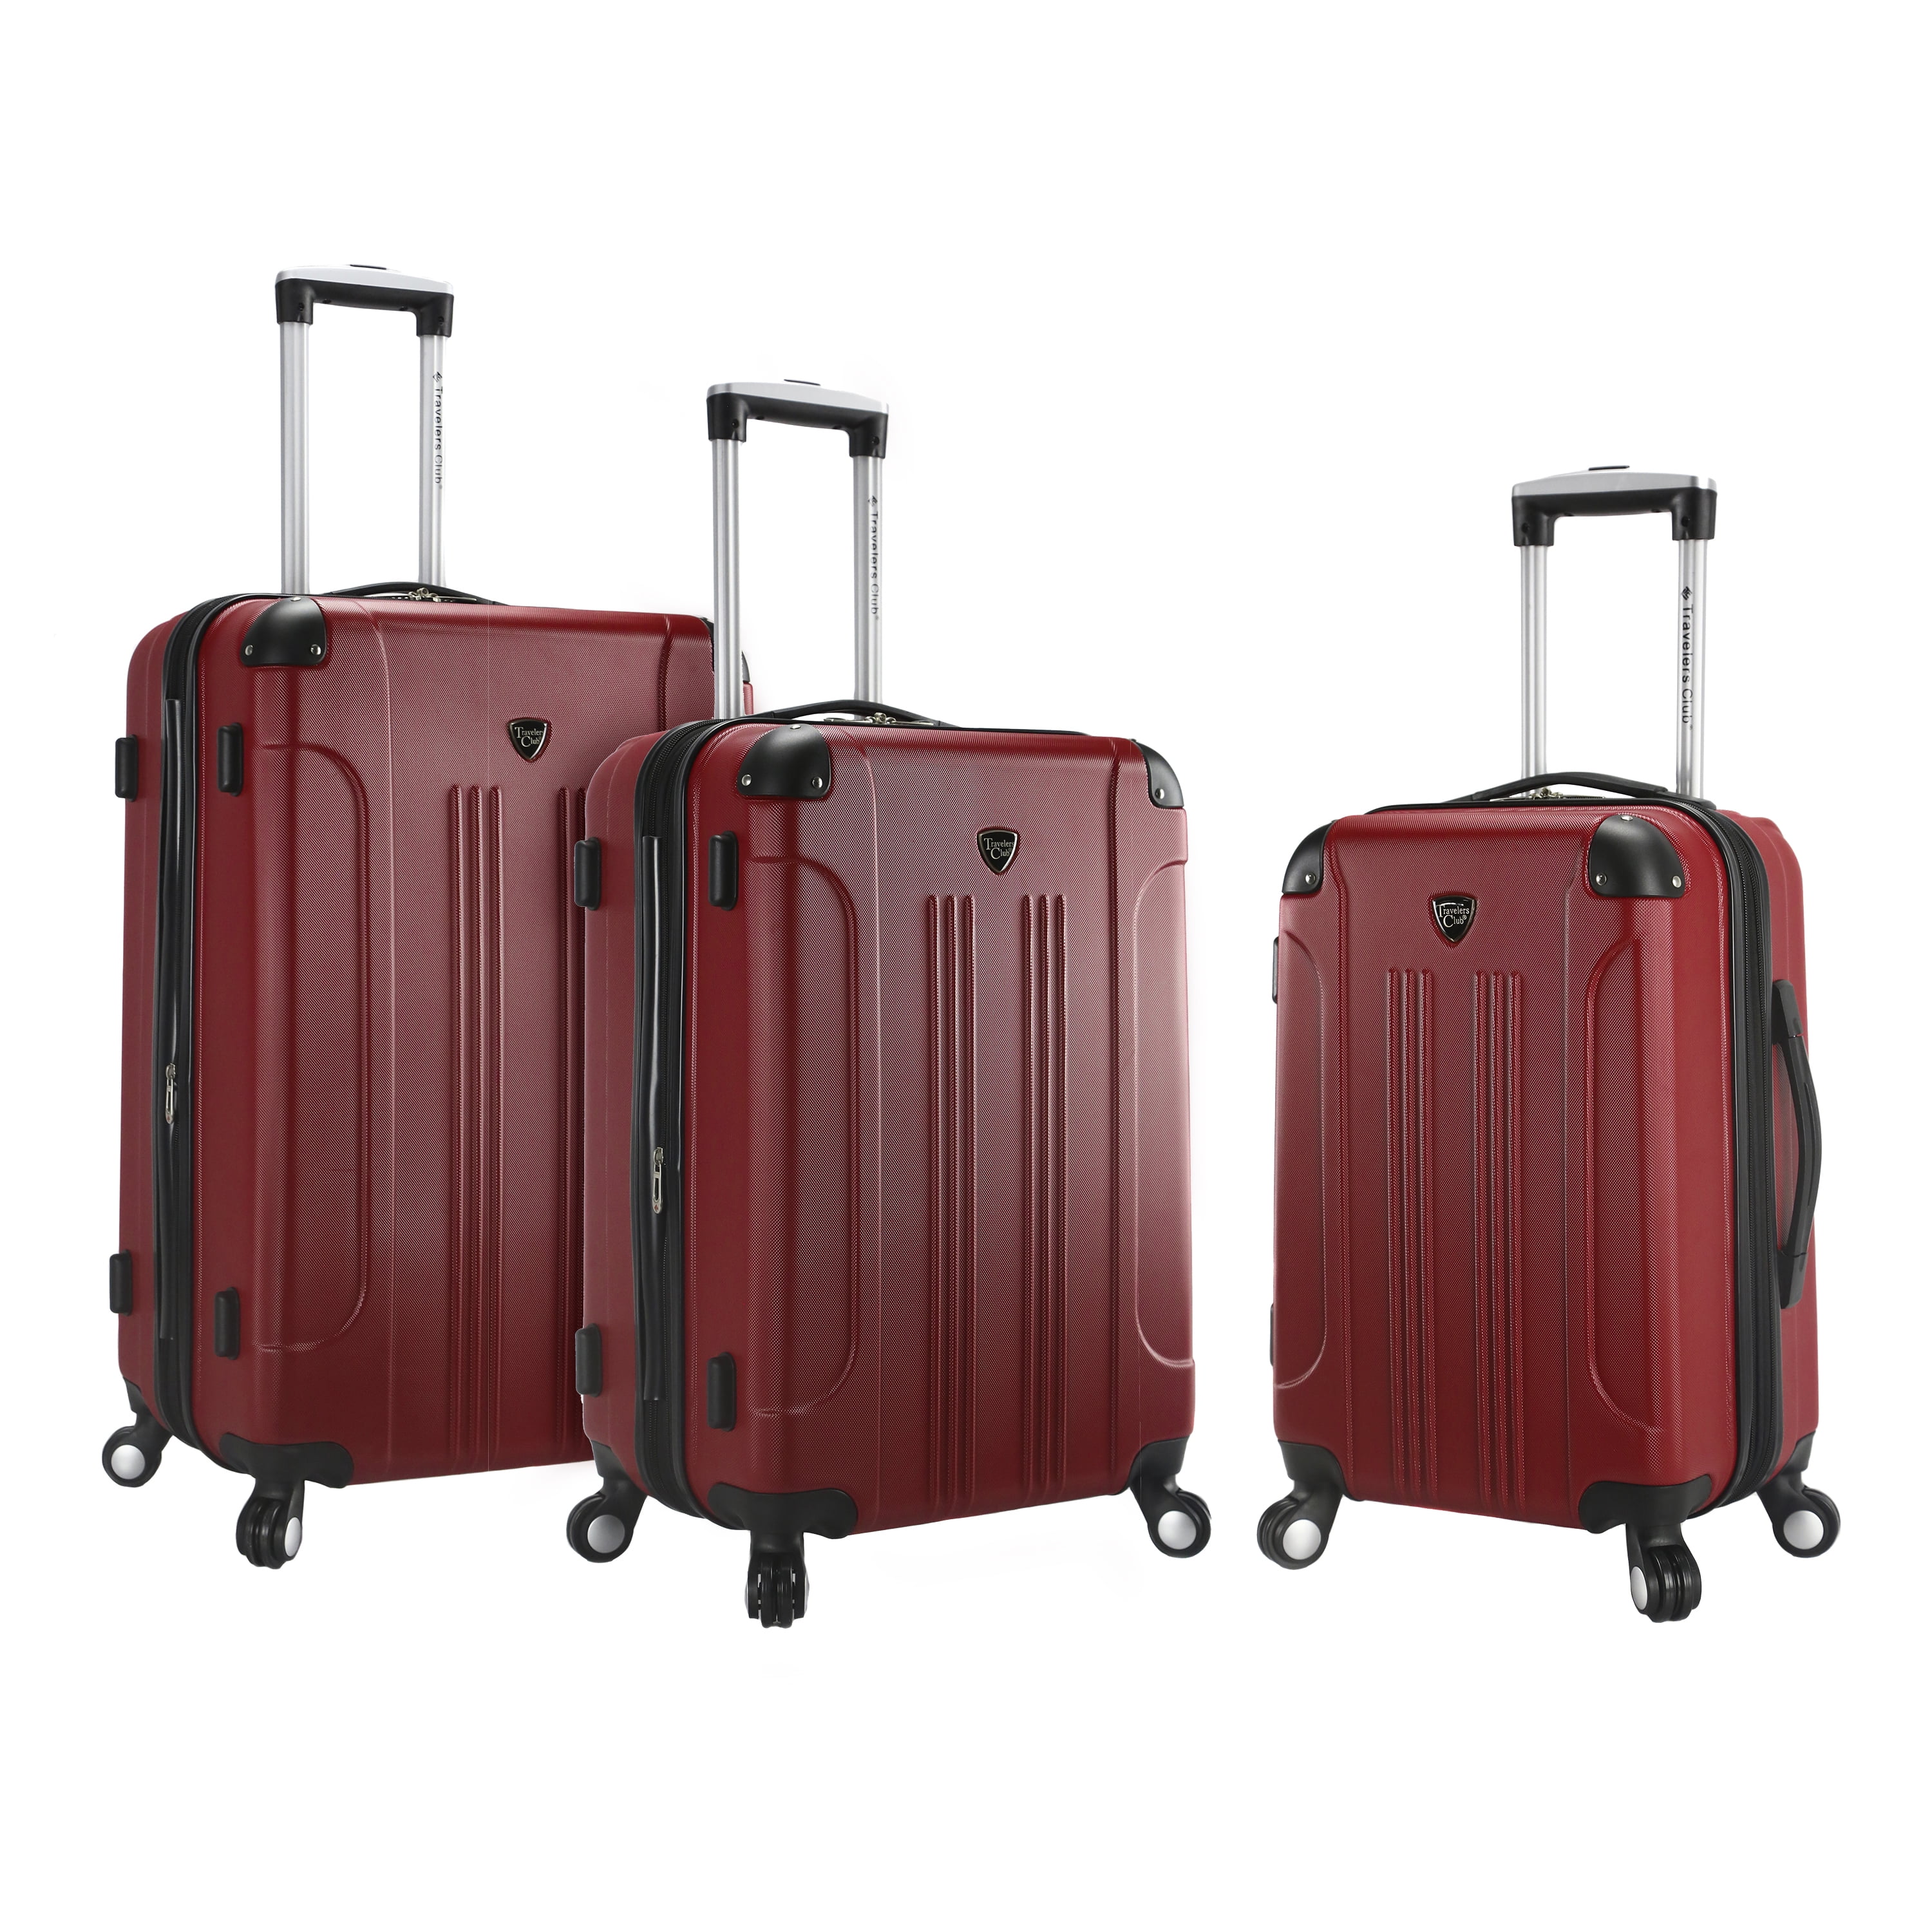 Travelers Club 3 pc. Expandable hard-side luggage set - Walmart.com